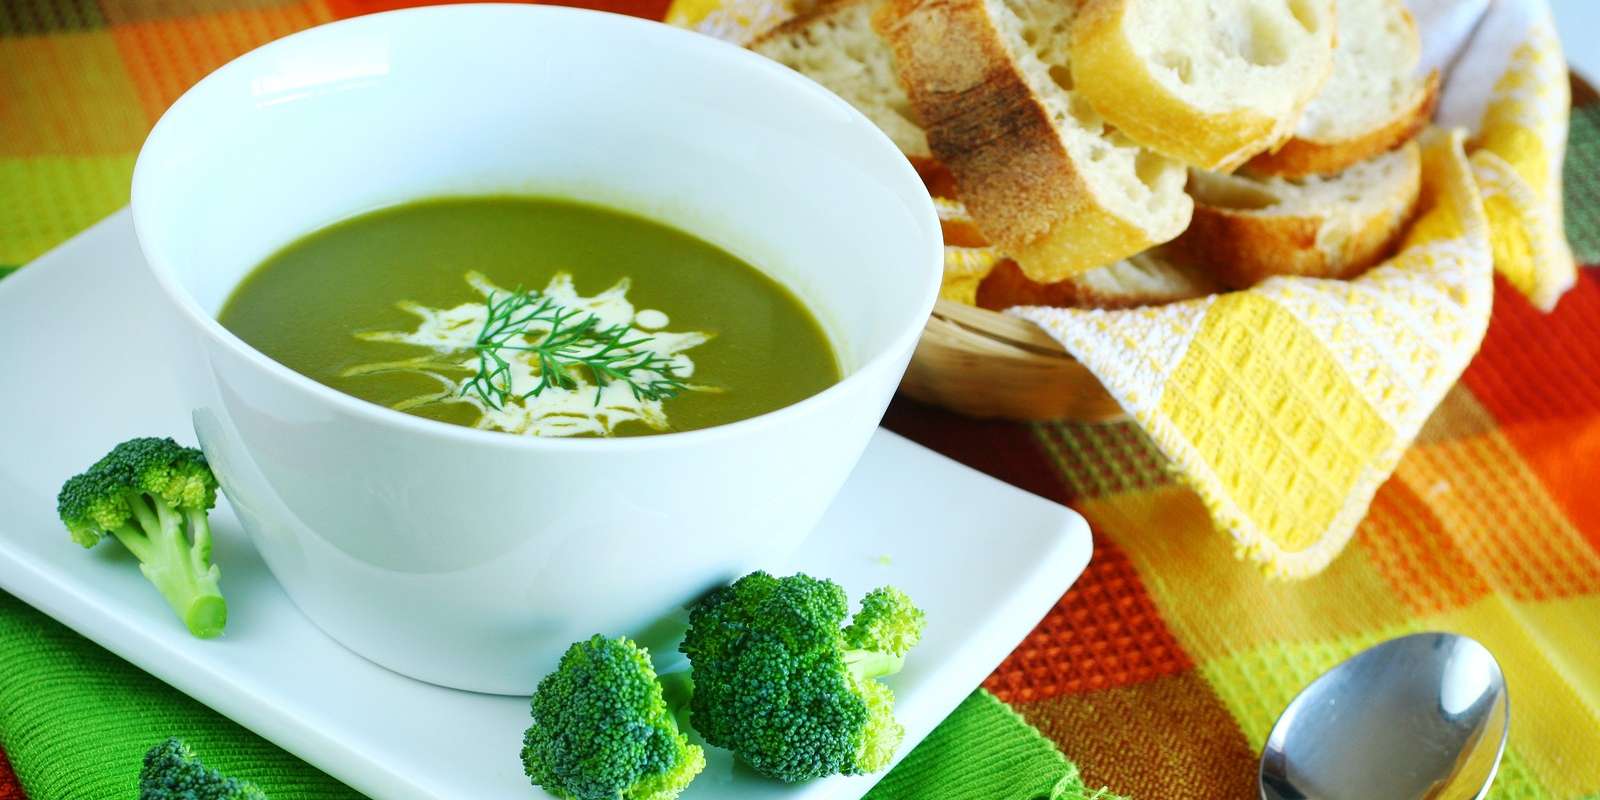 Broccoli-Cauliflower Soup